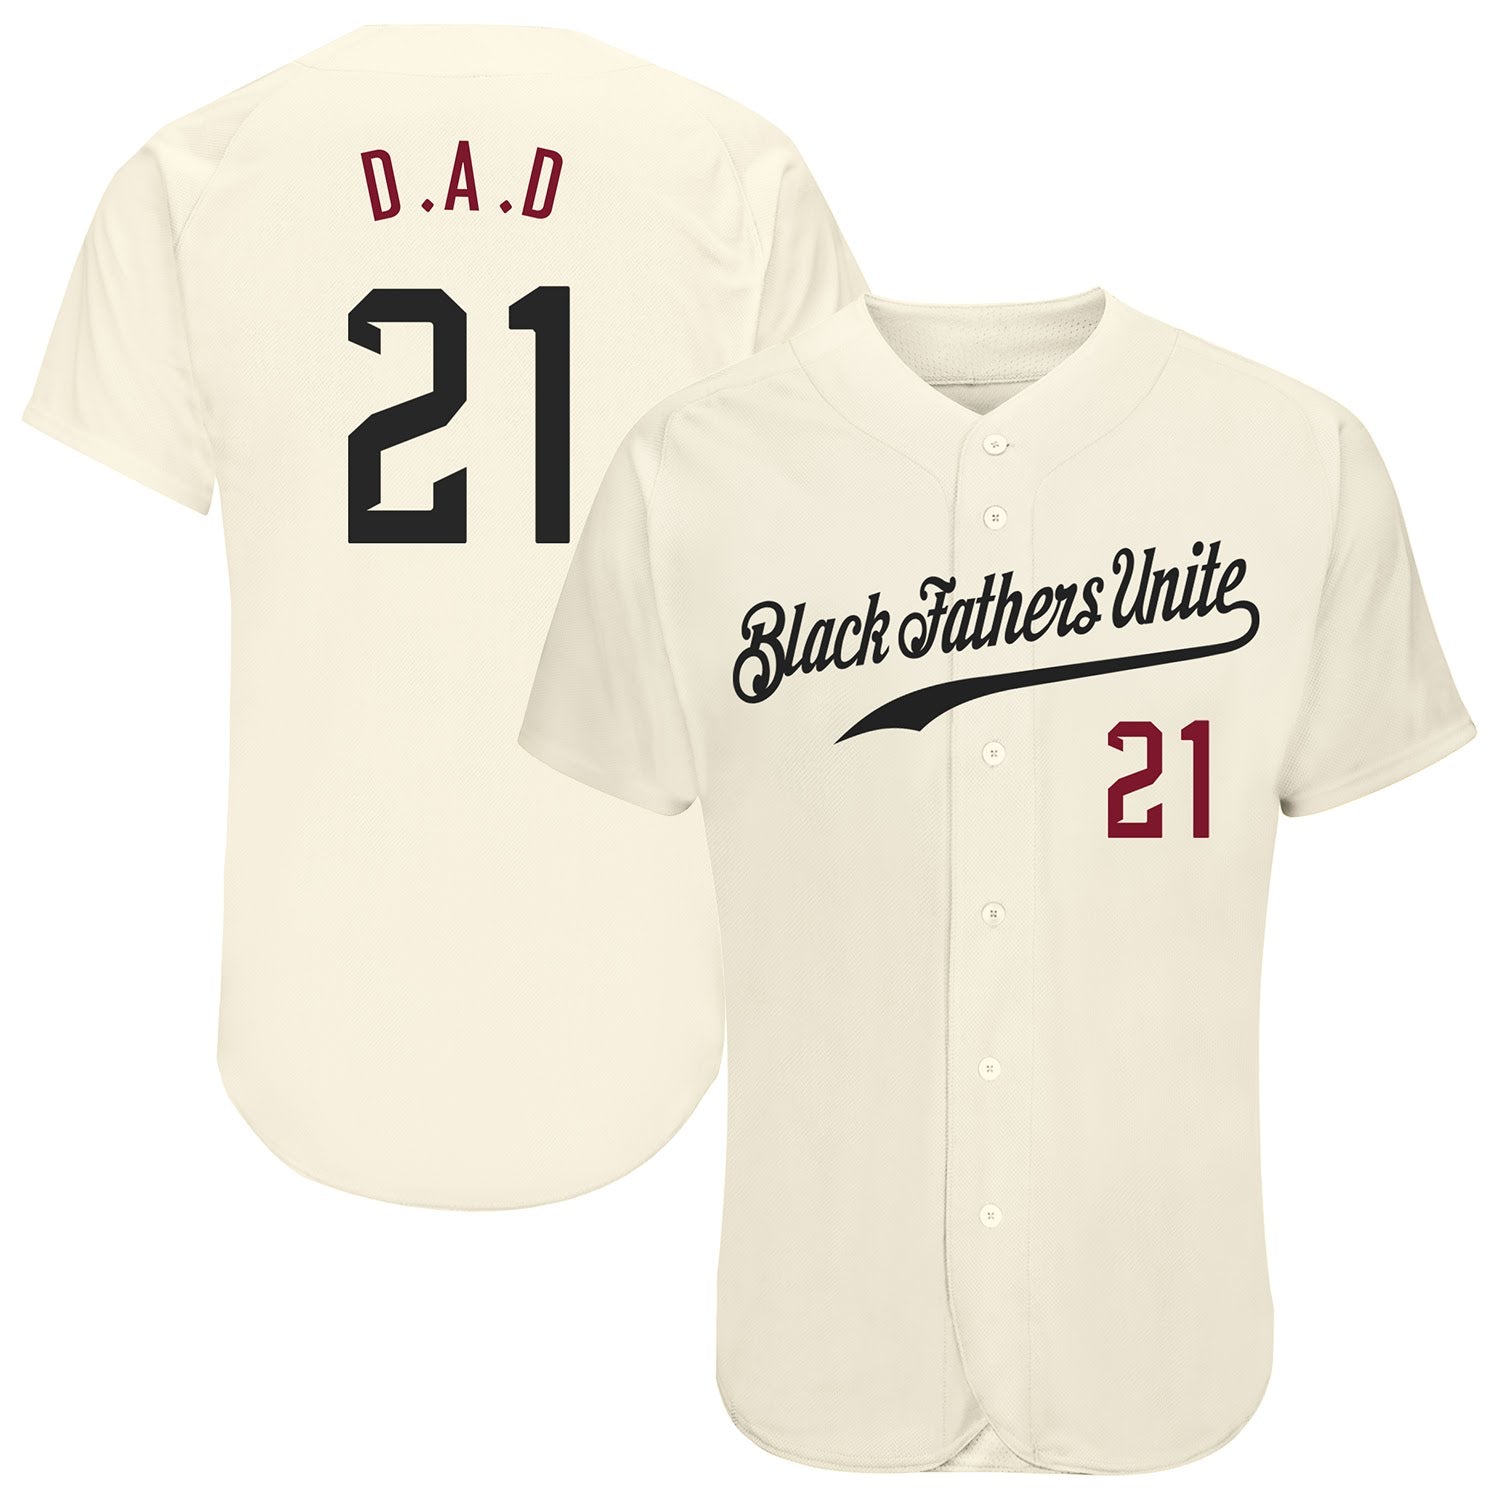 D.A.D Baseball Jersey – Black Fathers Unite